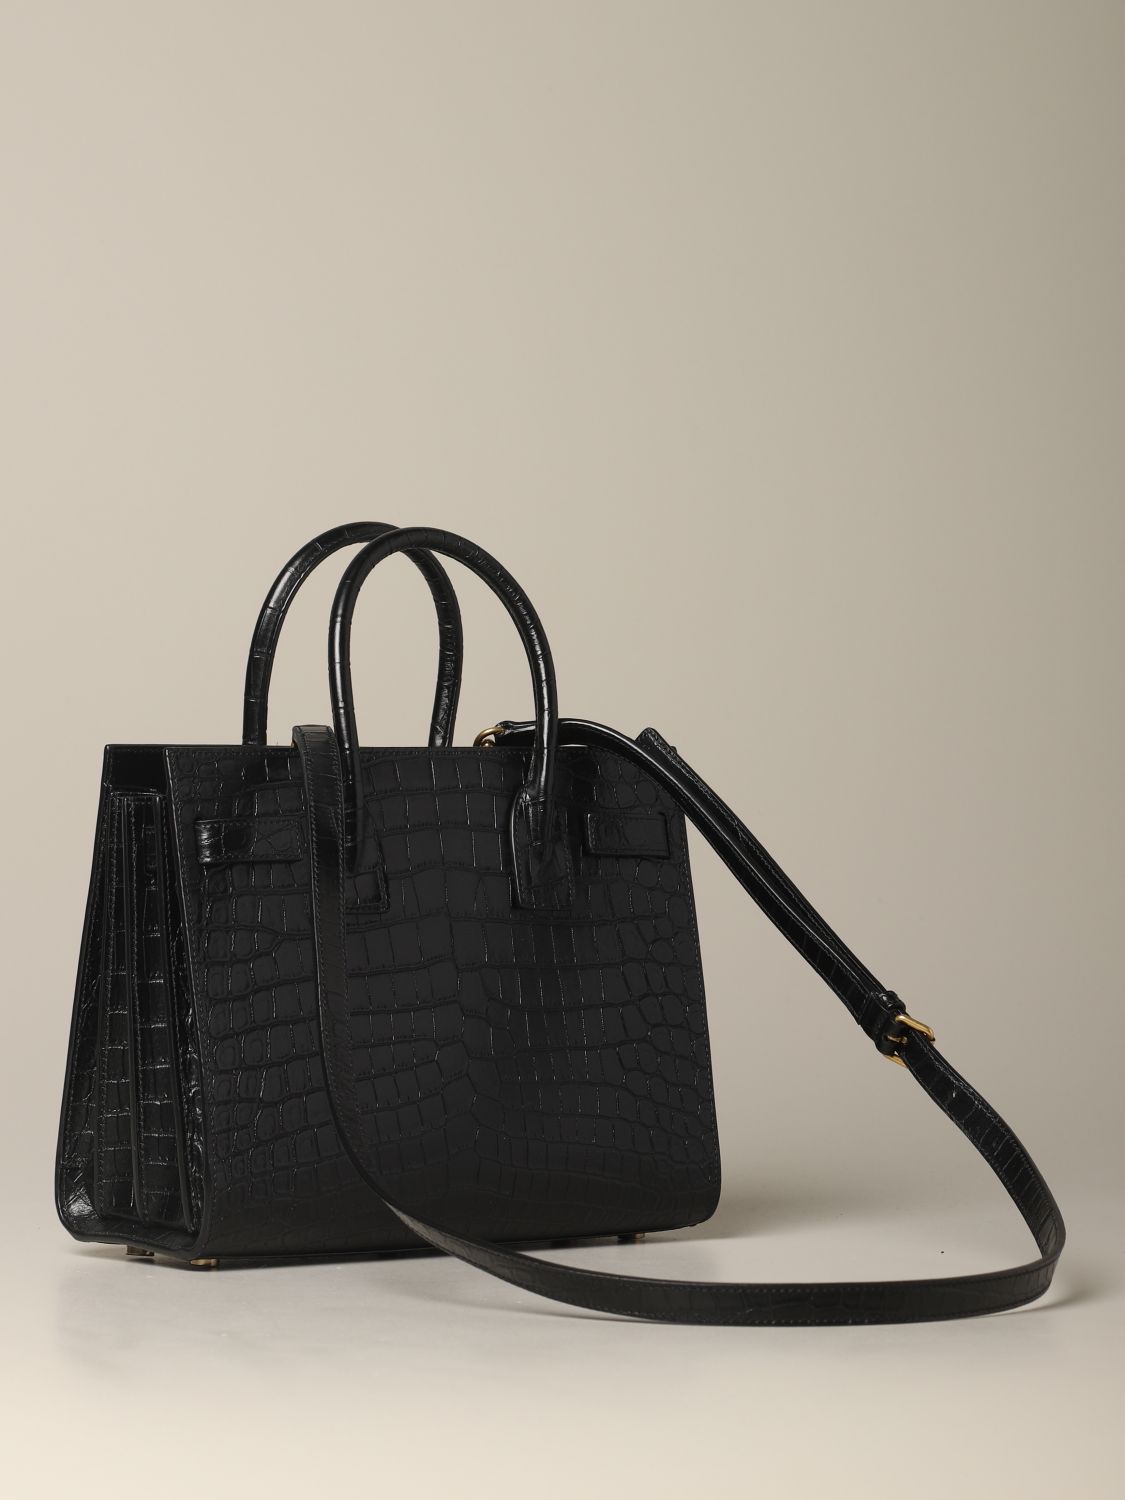 Sac De Jour Saint Laurent Bag In Crocodile Print Leather Handbag Saint Laurent Women Black Handbag Saint Laurent Dzeaw Giglio En